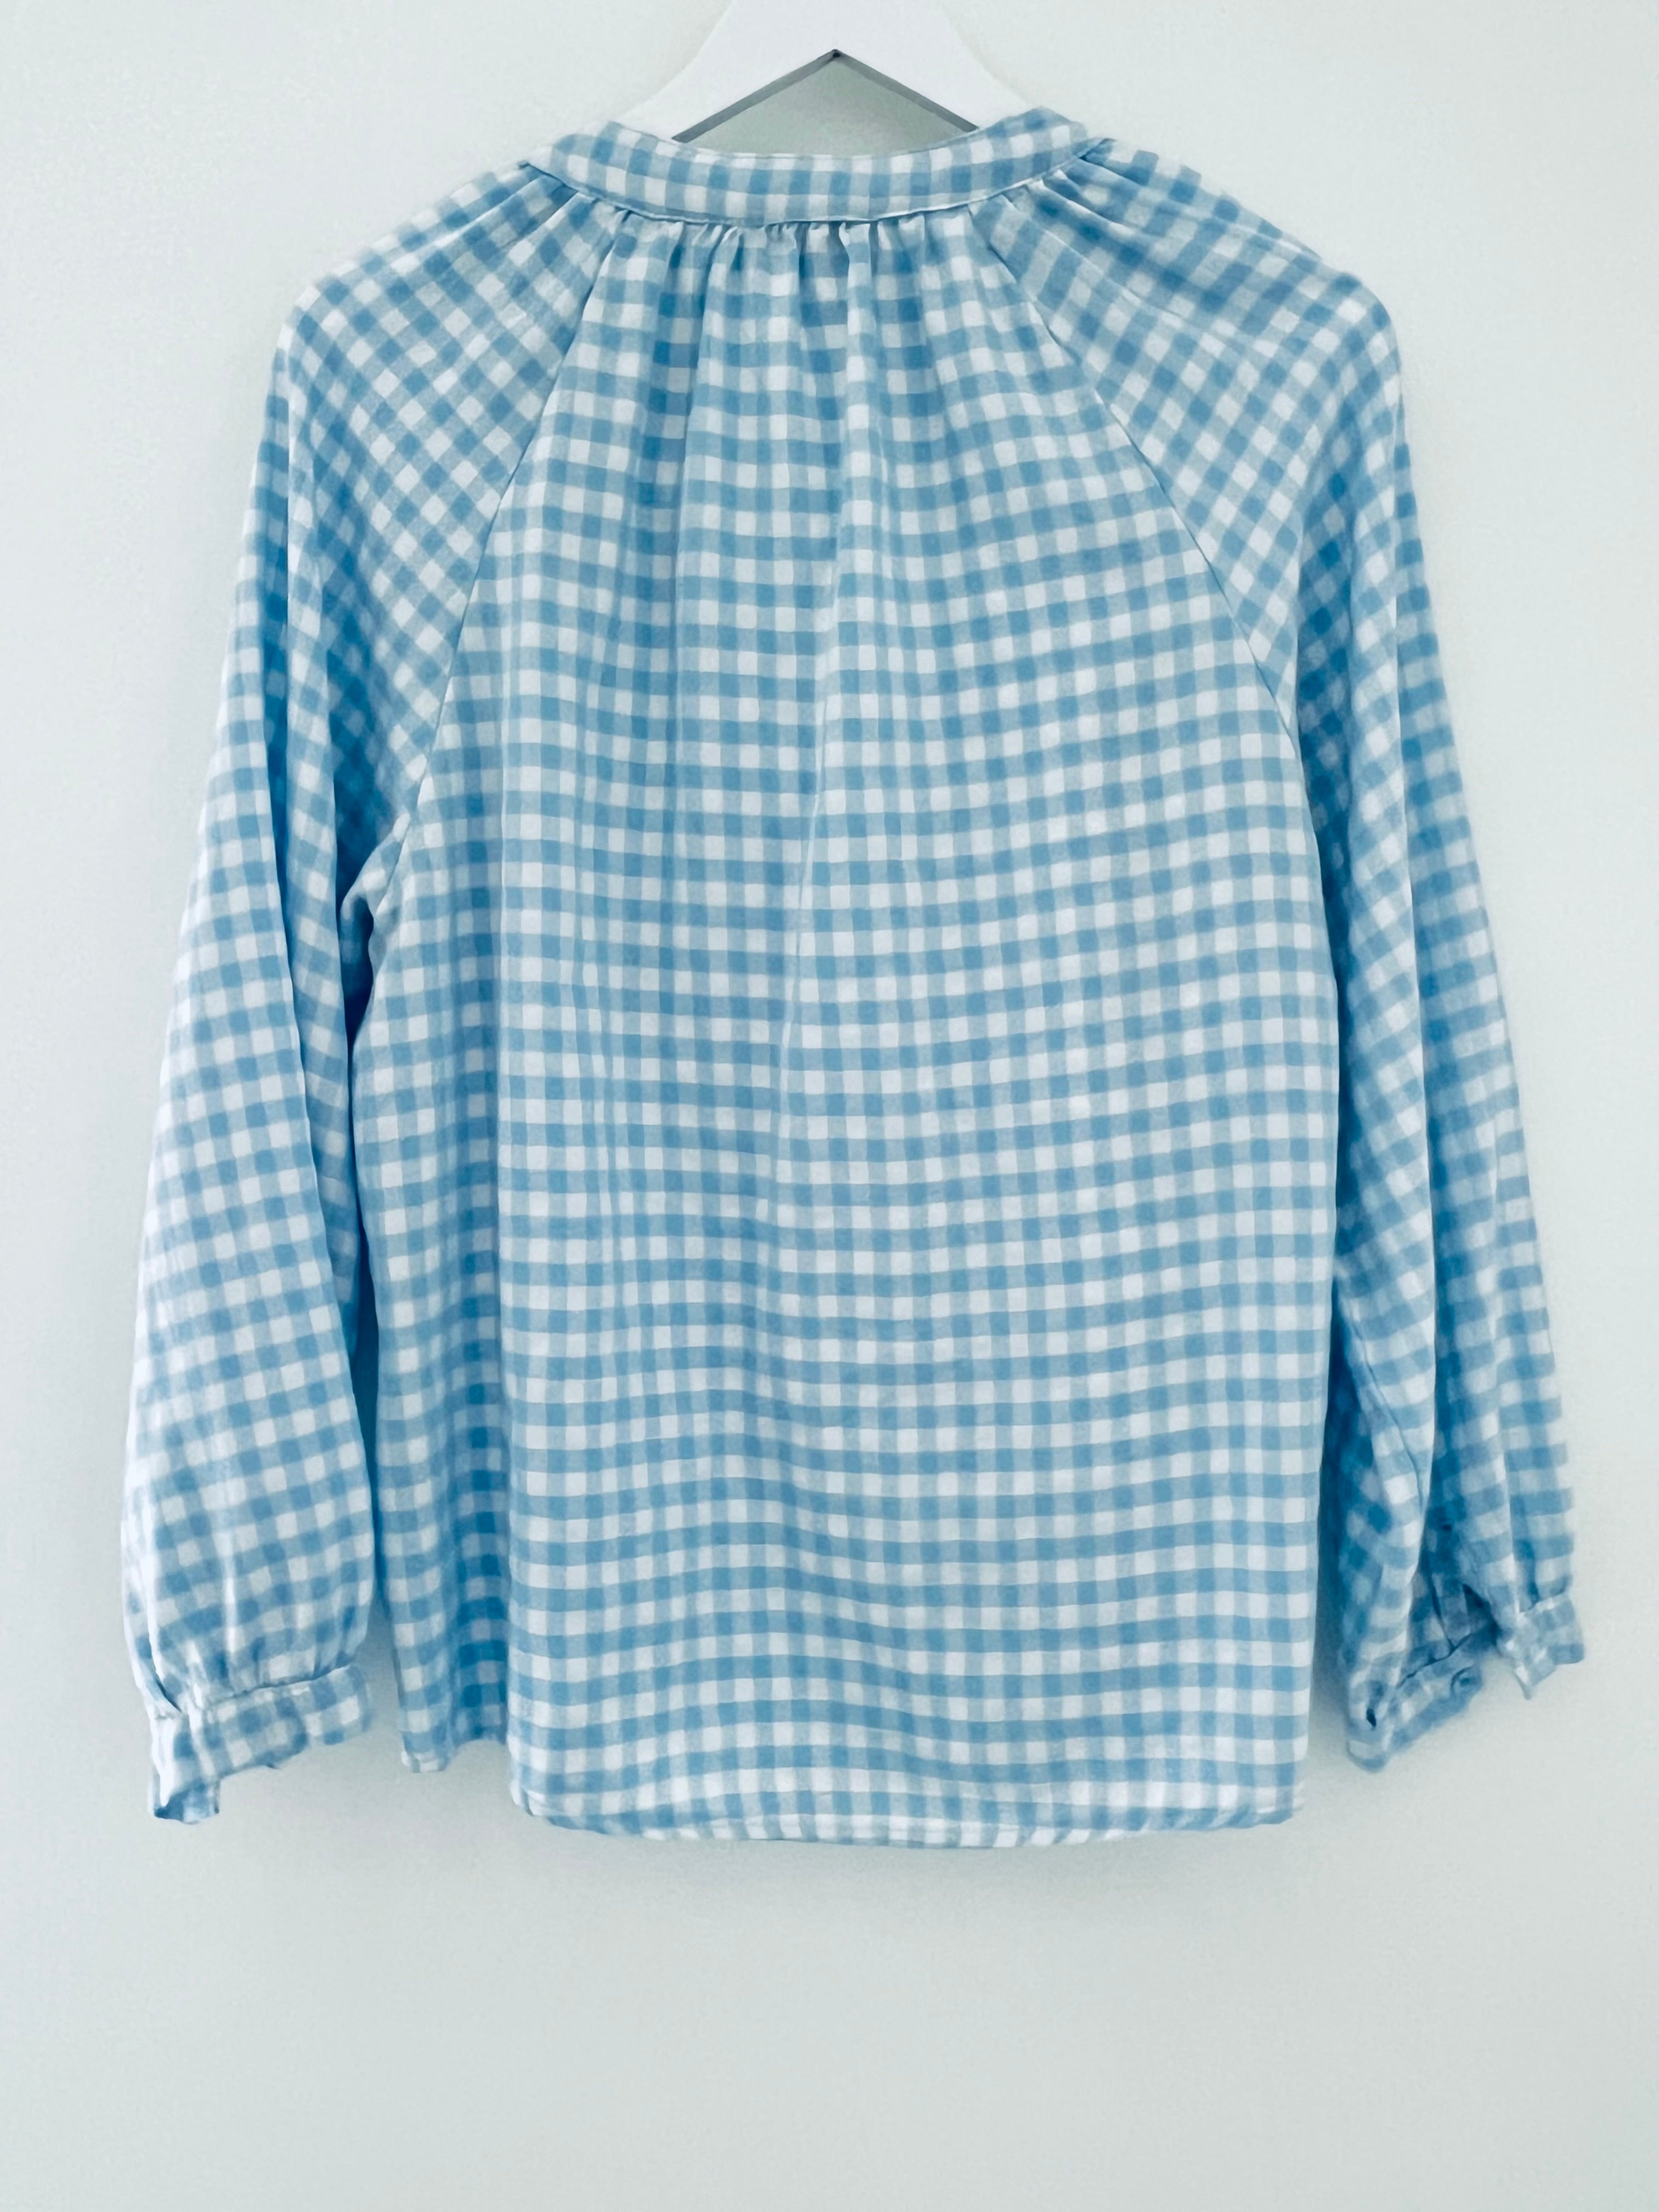 Gingham Shirt in Blue & White